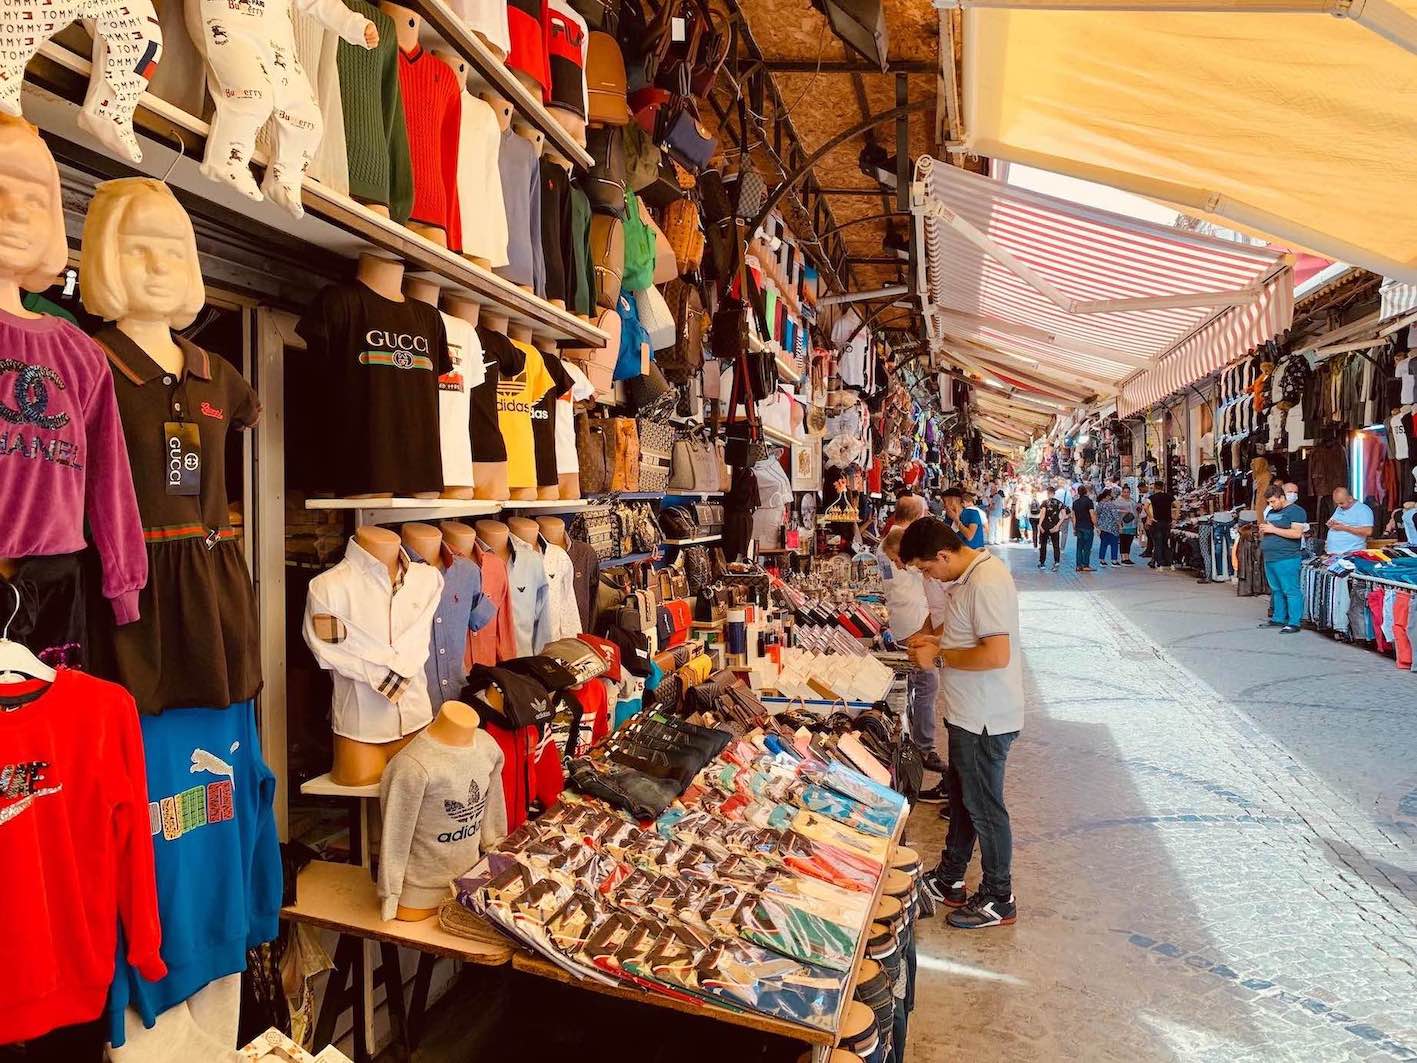 Outdoor market street in Istanbul.